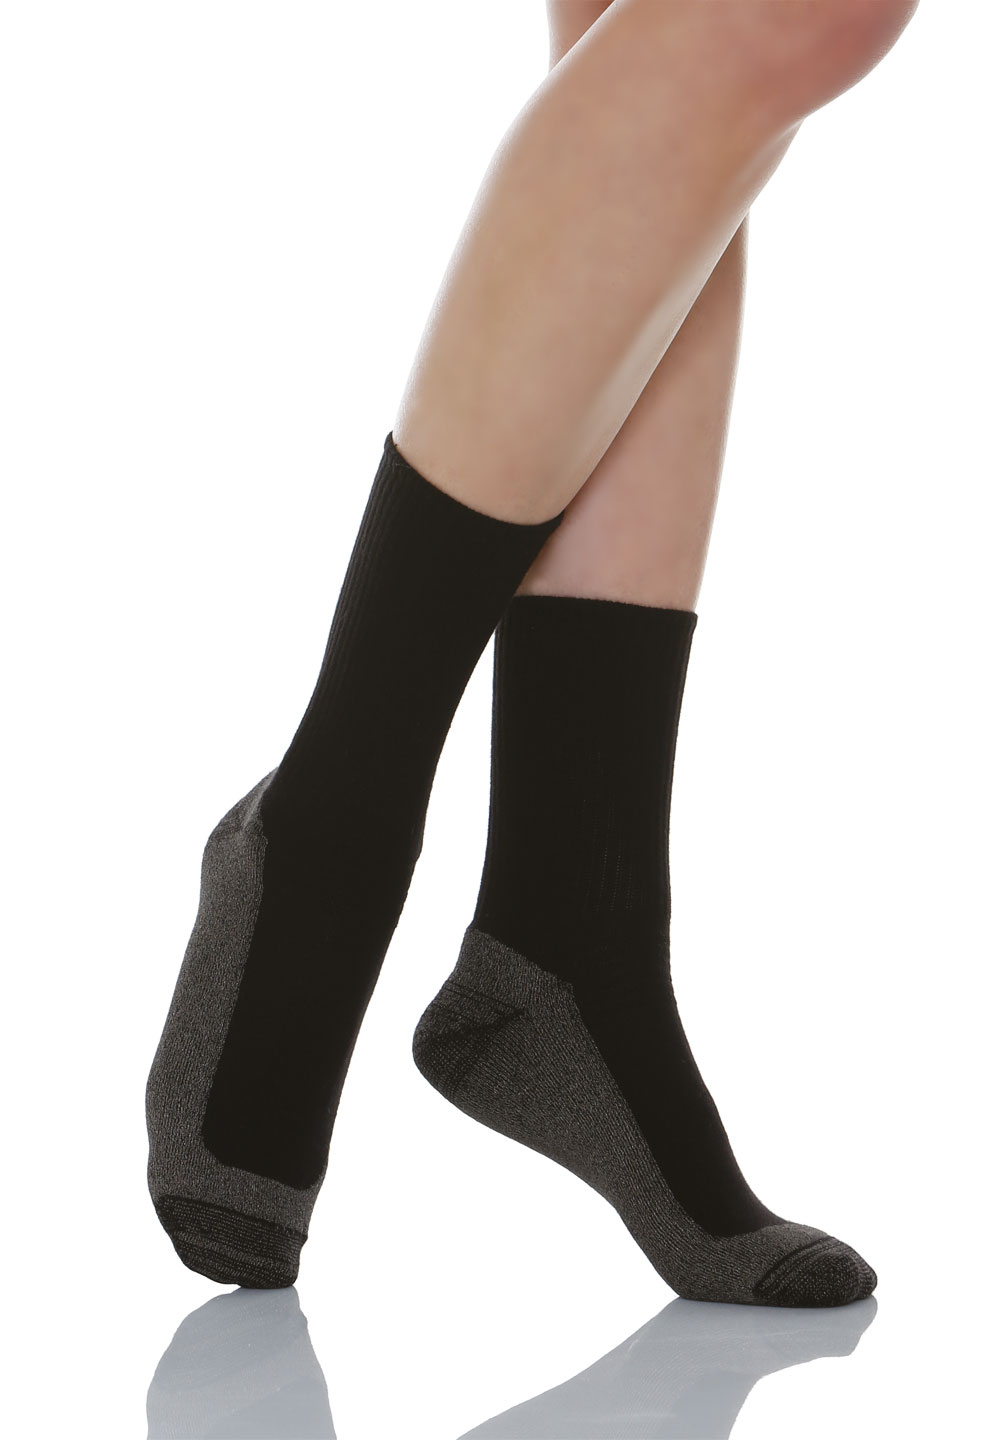 Buy Relaxsan 550P X-Static Silver Store socks diabetic Aviano to shape - your fiber body